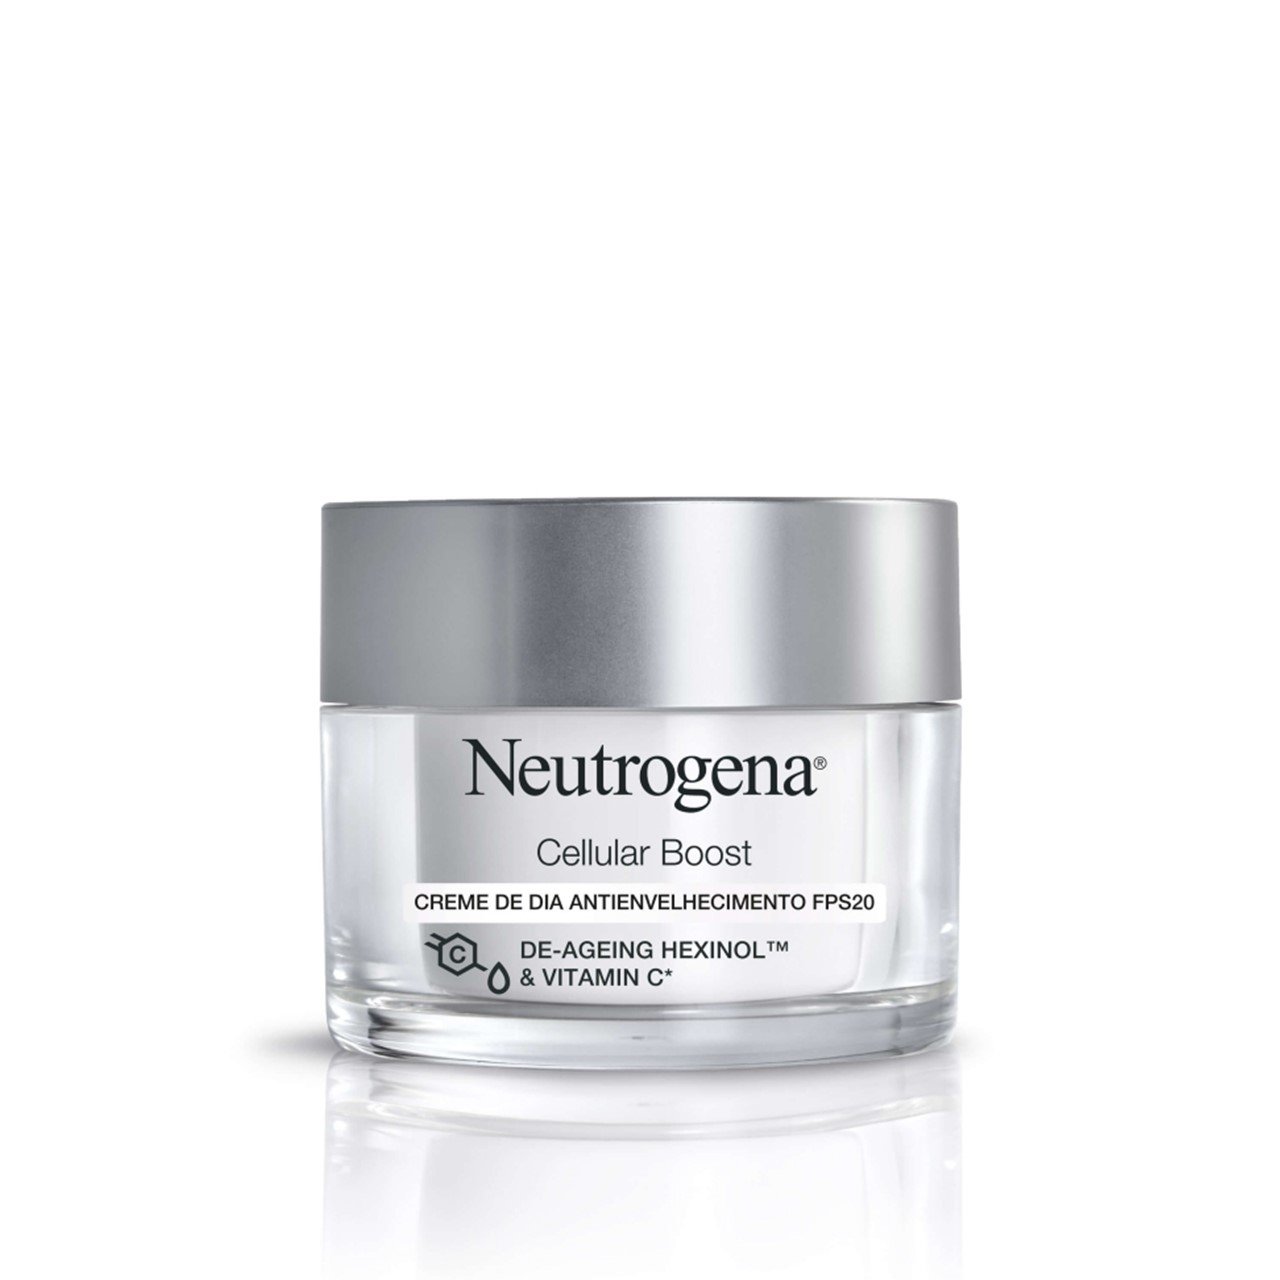 neutrogena cellular boost mask review